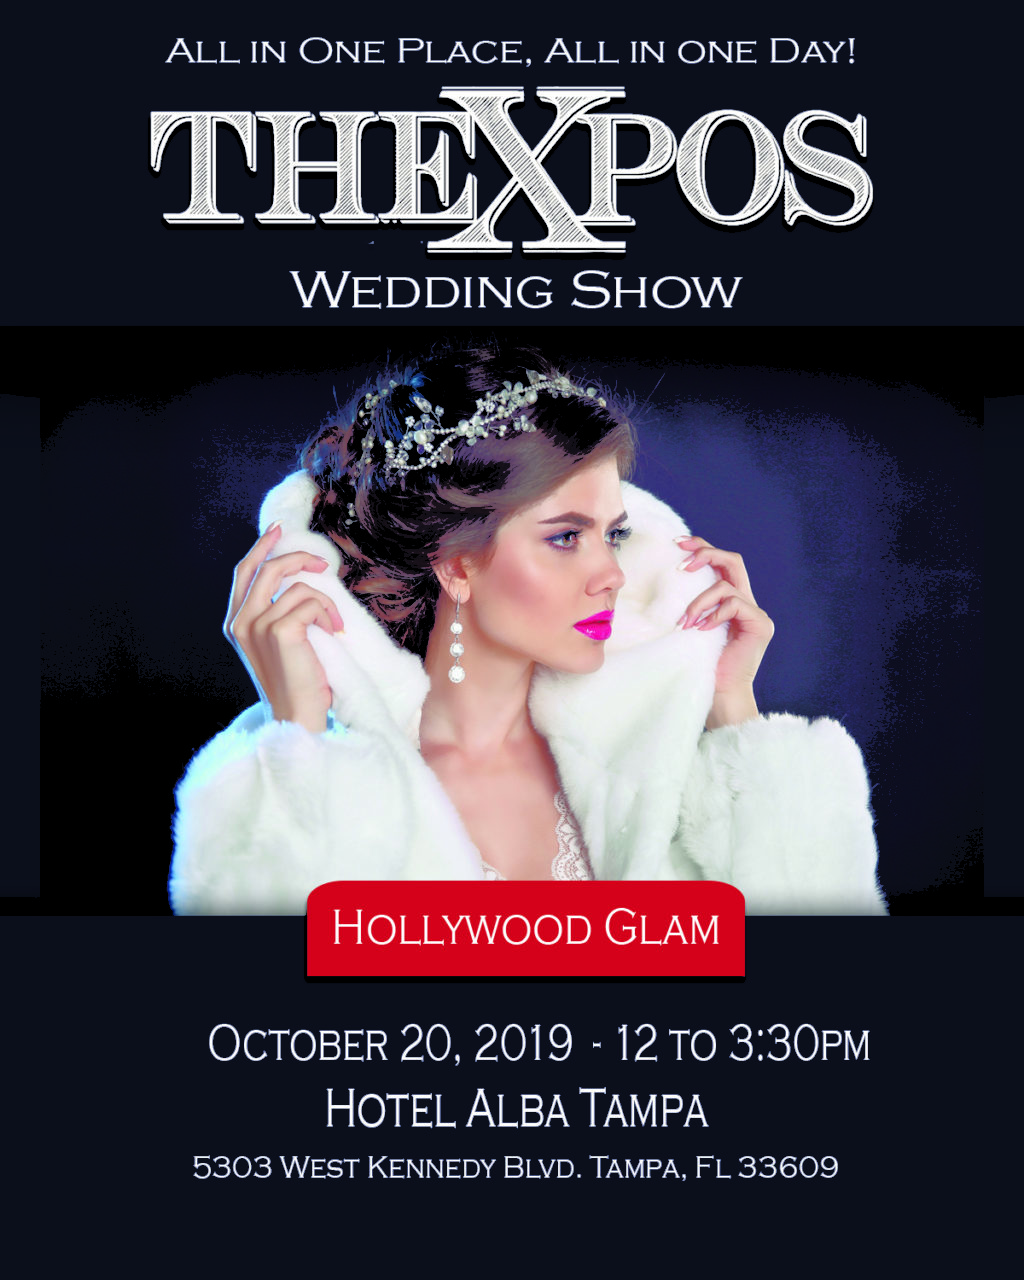 Hotel Alba TheXpos Wedding Show Flyer | Sunday, October 20, 2019